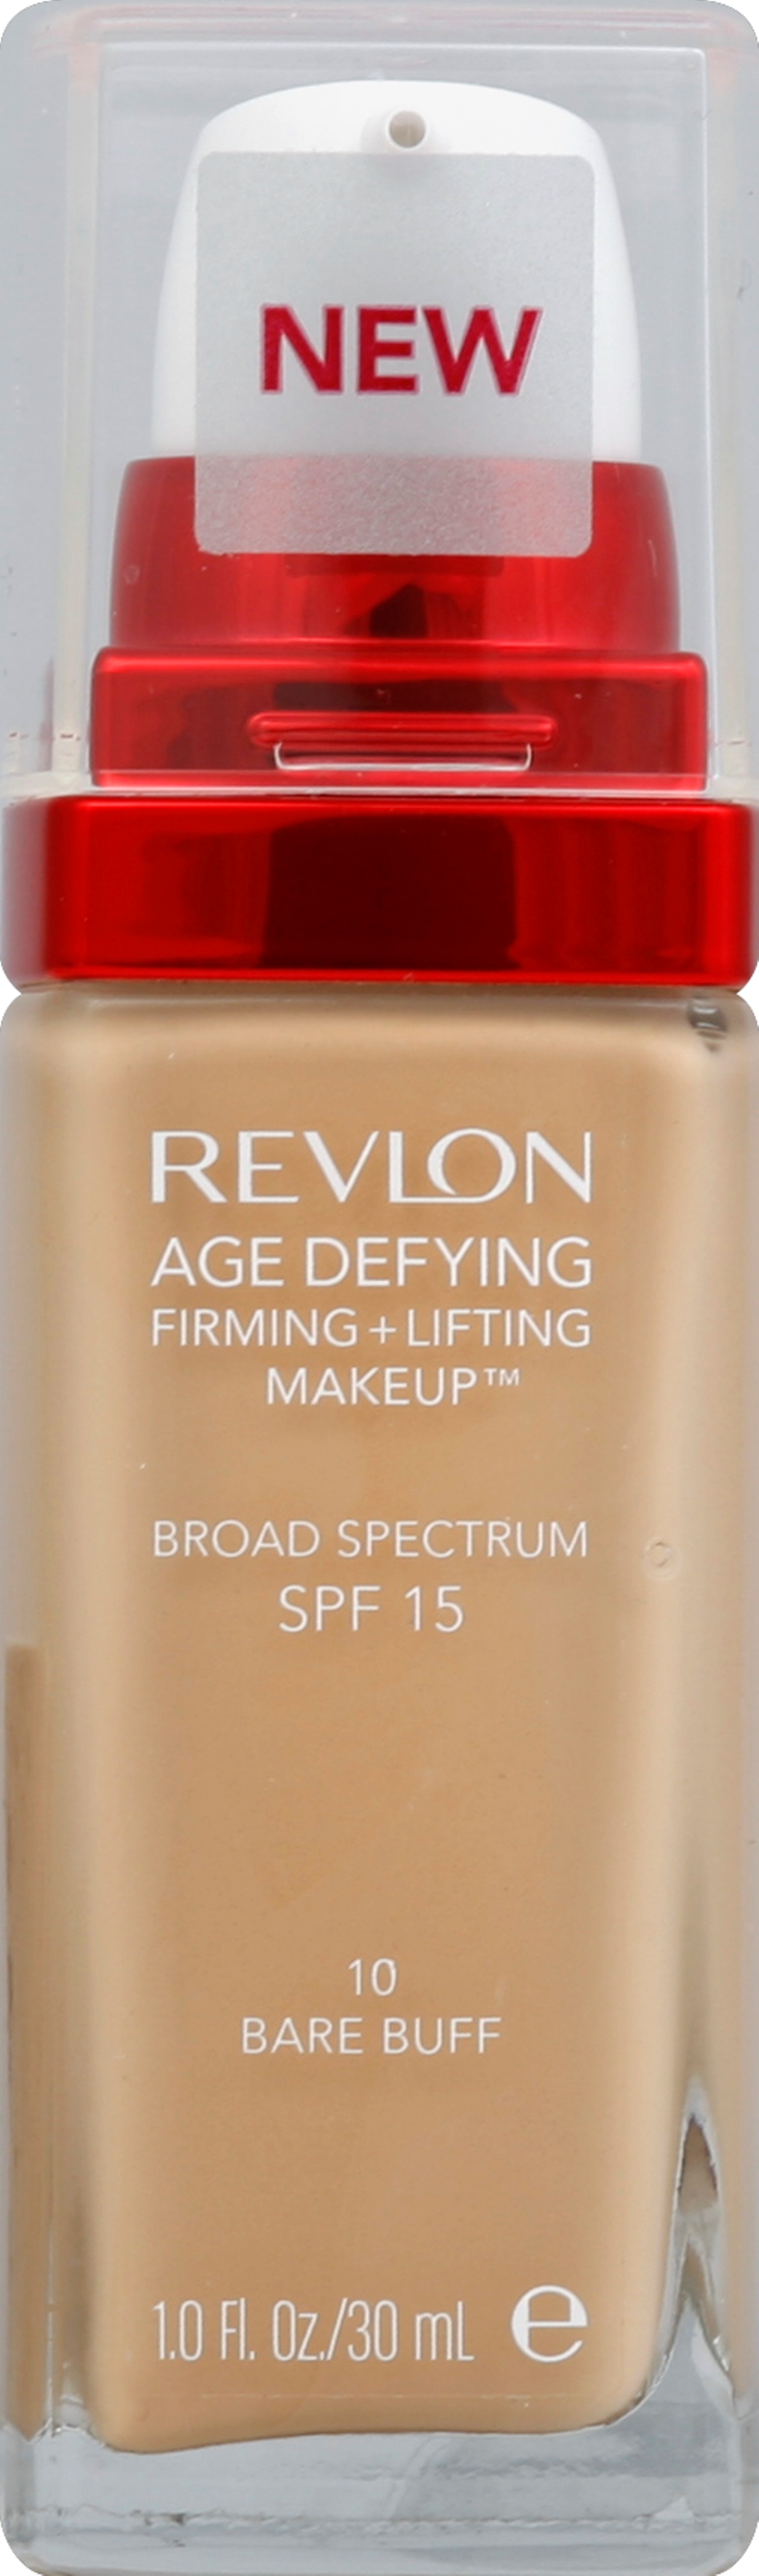 Revlon Firming + Lifting Makeup Broad Spectrum SPF 15